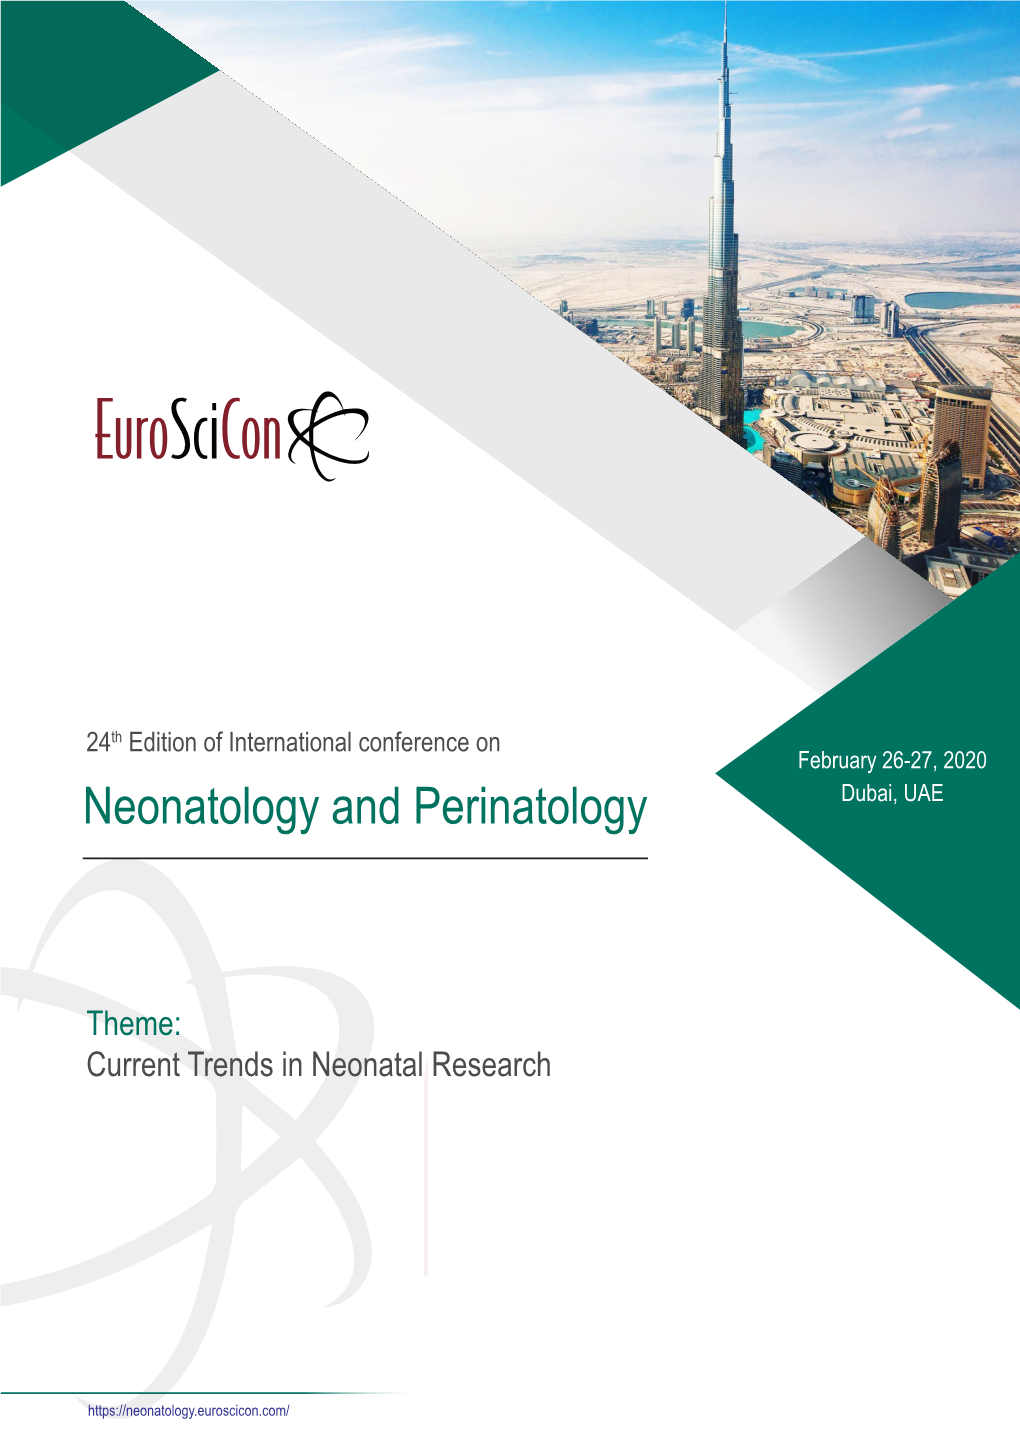 Neonatology and Perinatology Dubai, UAE